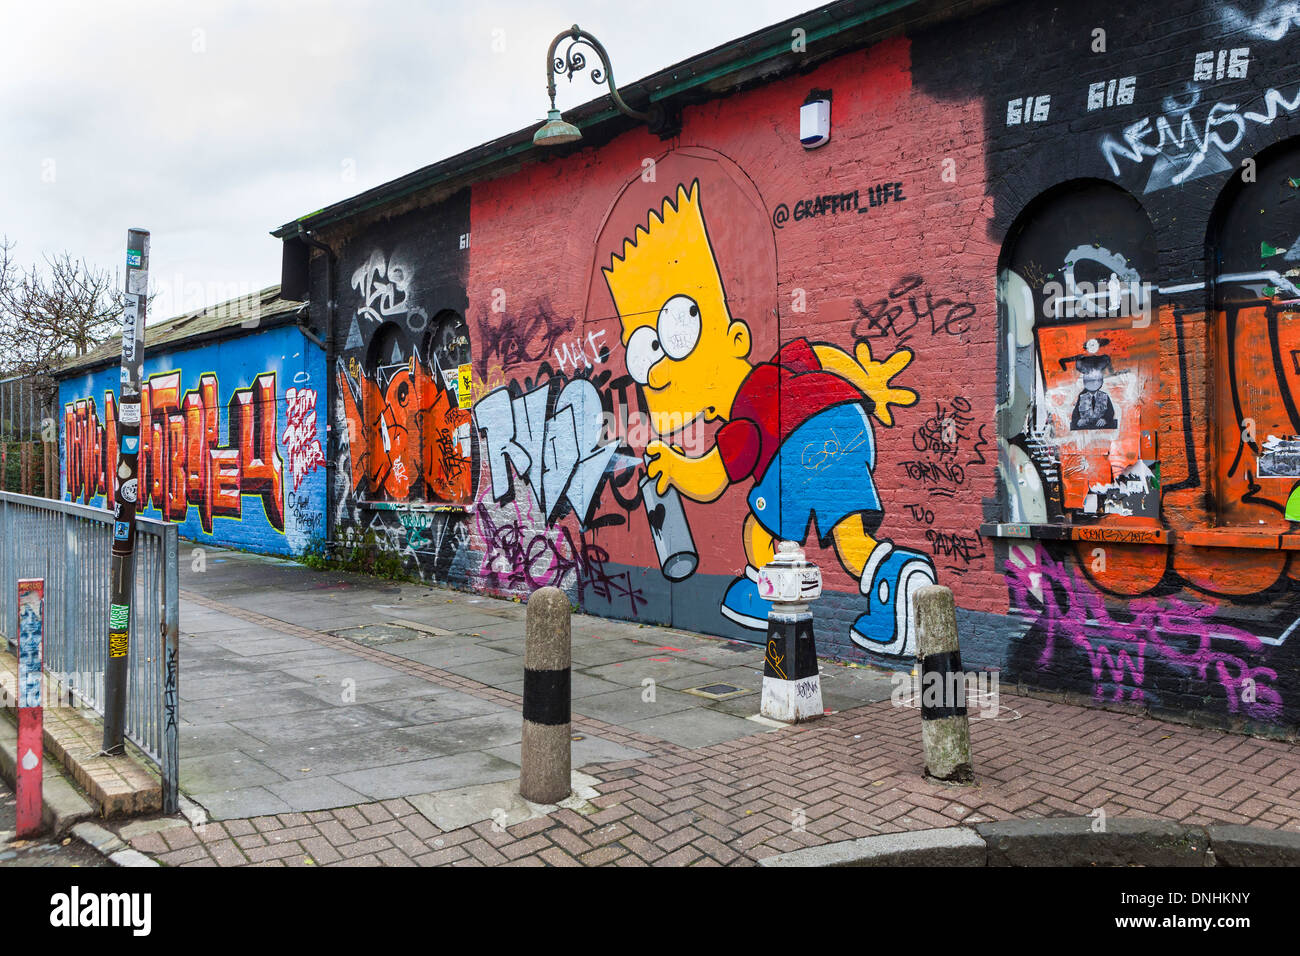 Street art and graffiti tags - Homer Simpson using spray can paint - Pedley street, off Brick lane, East London, UK Stock Photo